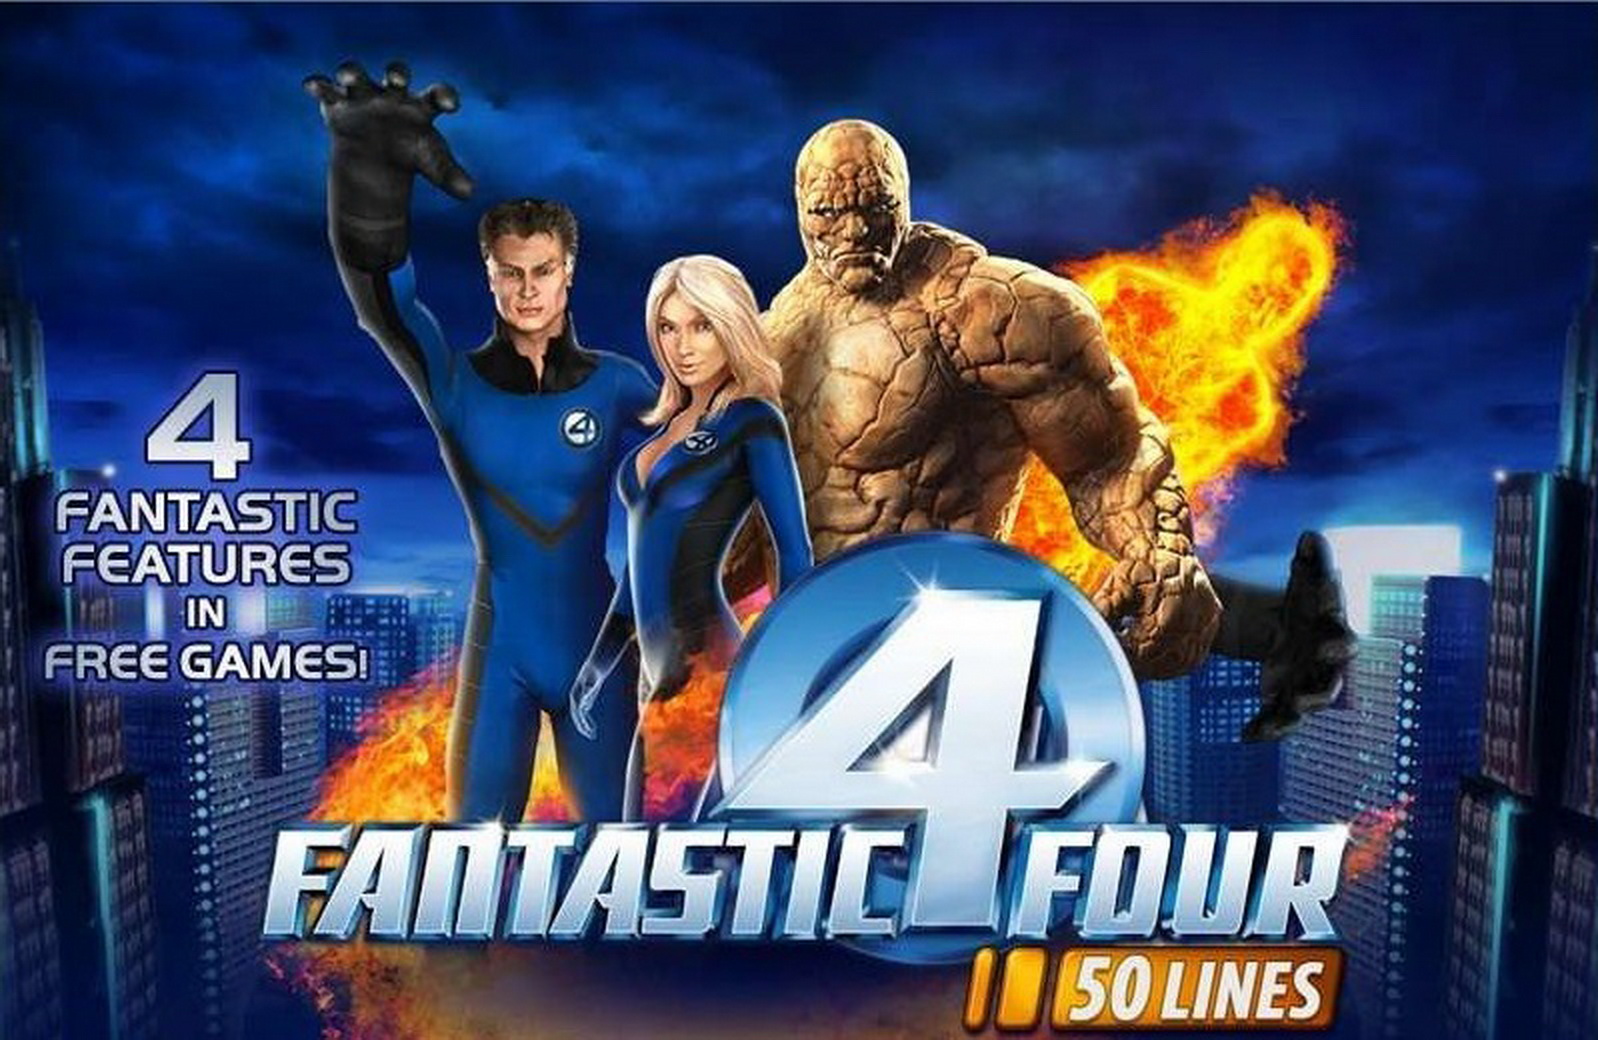 Fantastic Four 50 lines demo